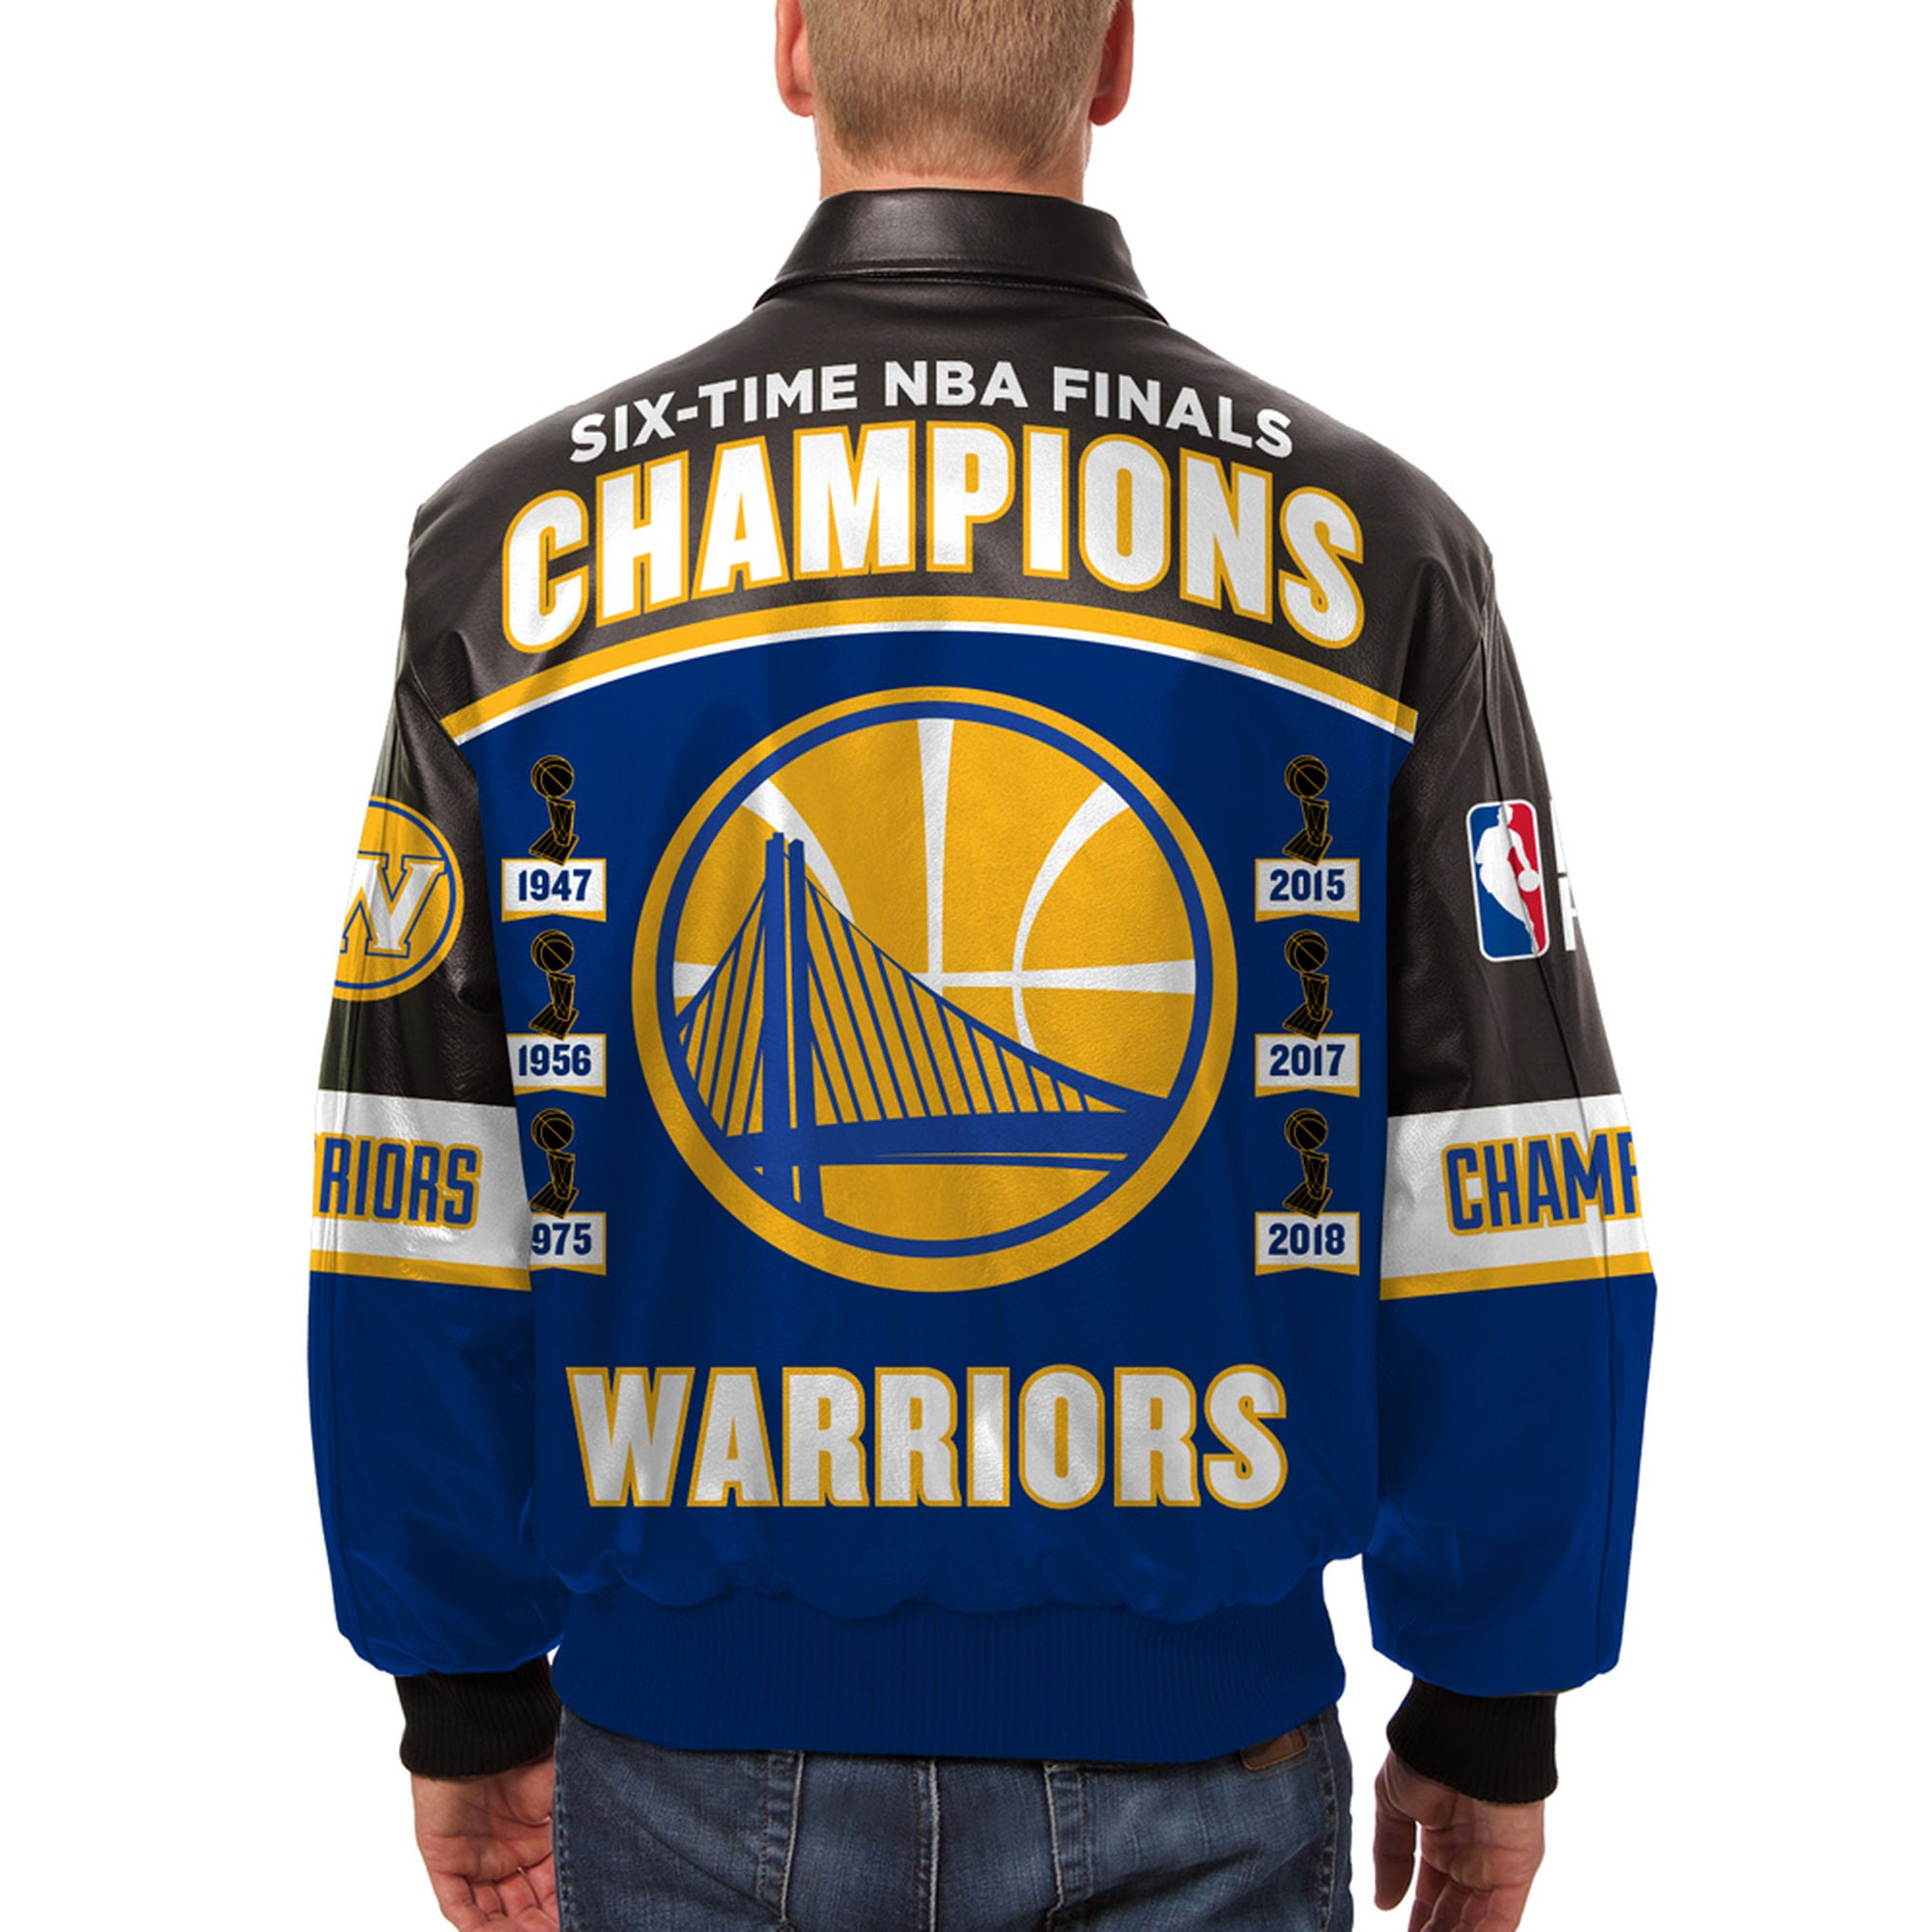 NBA Golden State Warriors Jacket  Warriors jacket, Jackets, Clothes design